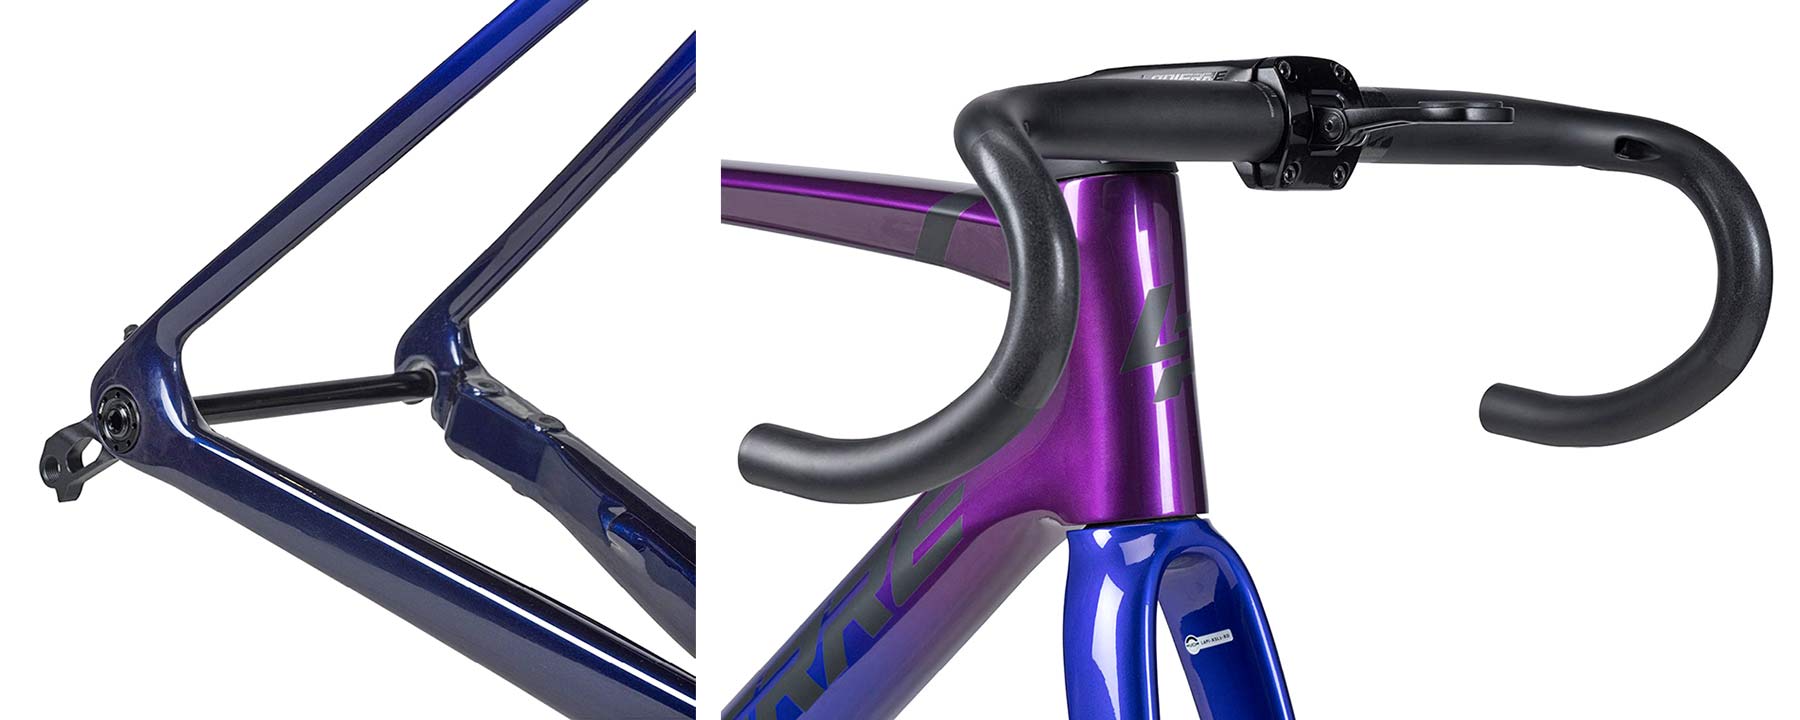 2022 Lapierre Xelius SL3 road bike, faster lighter more aero, details